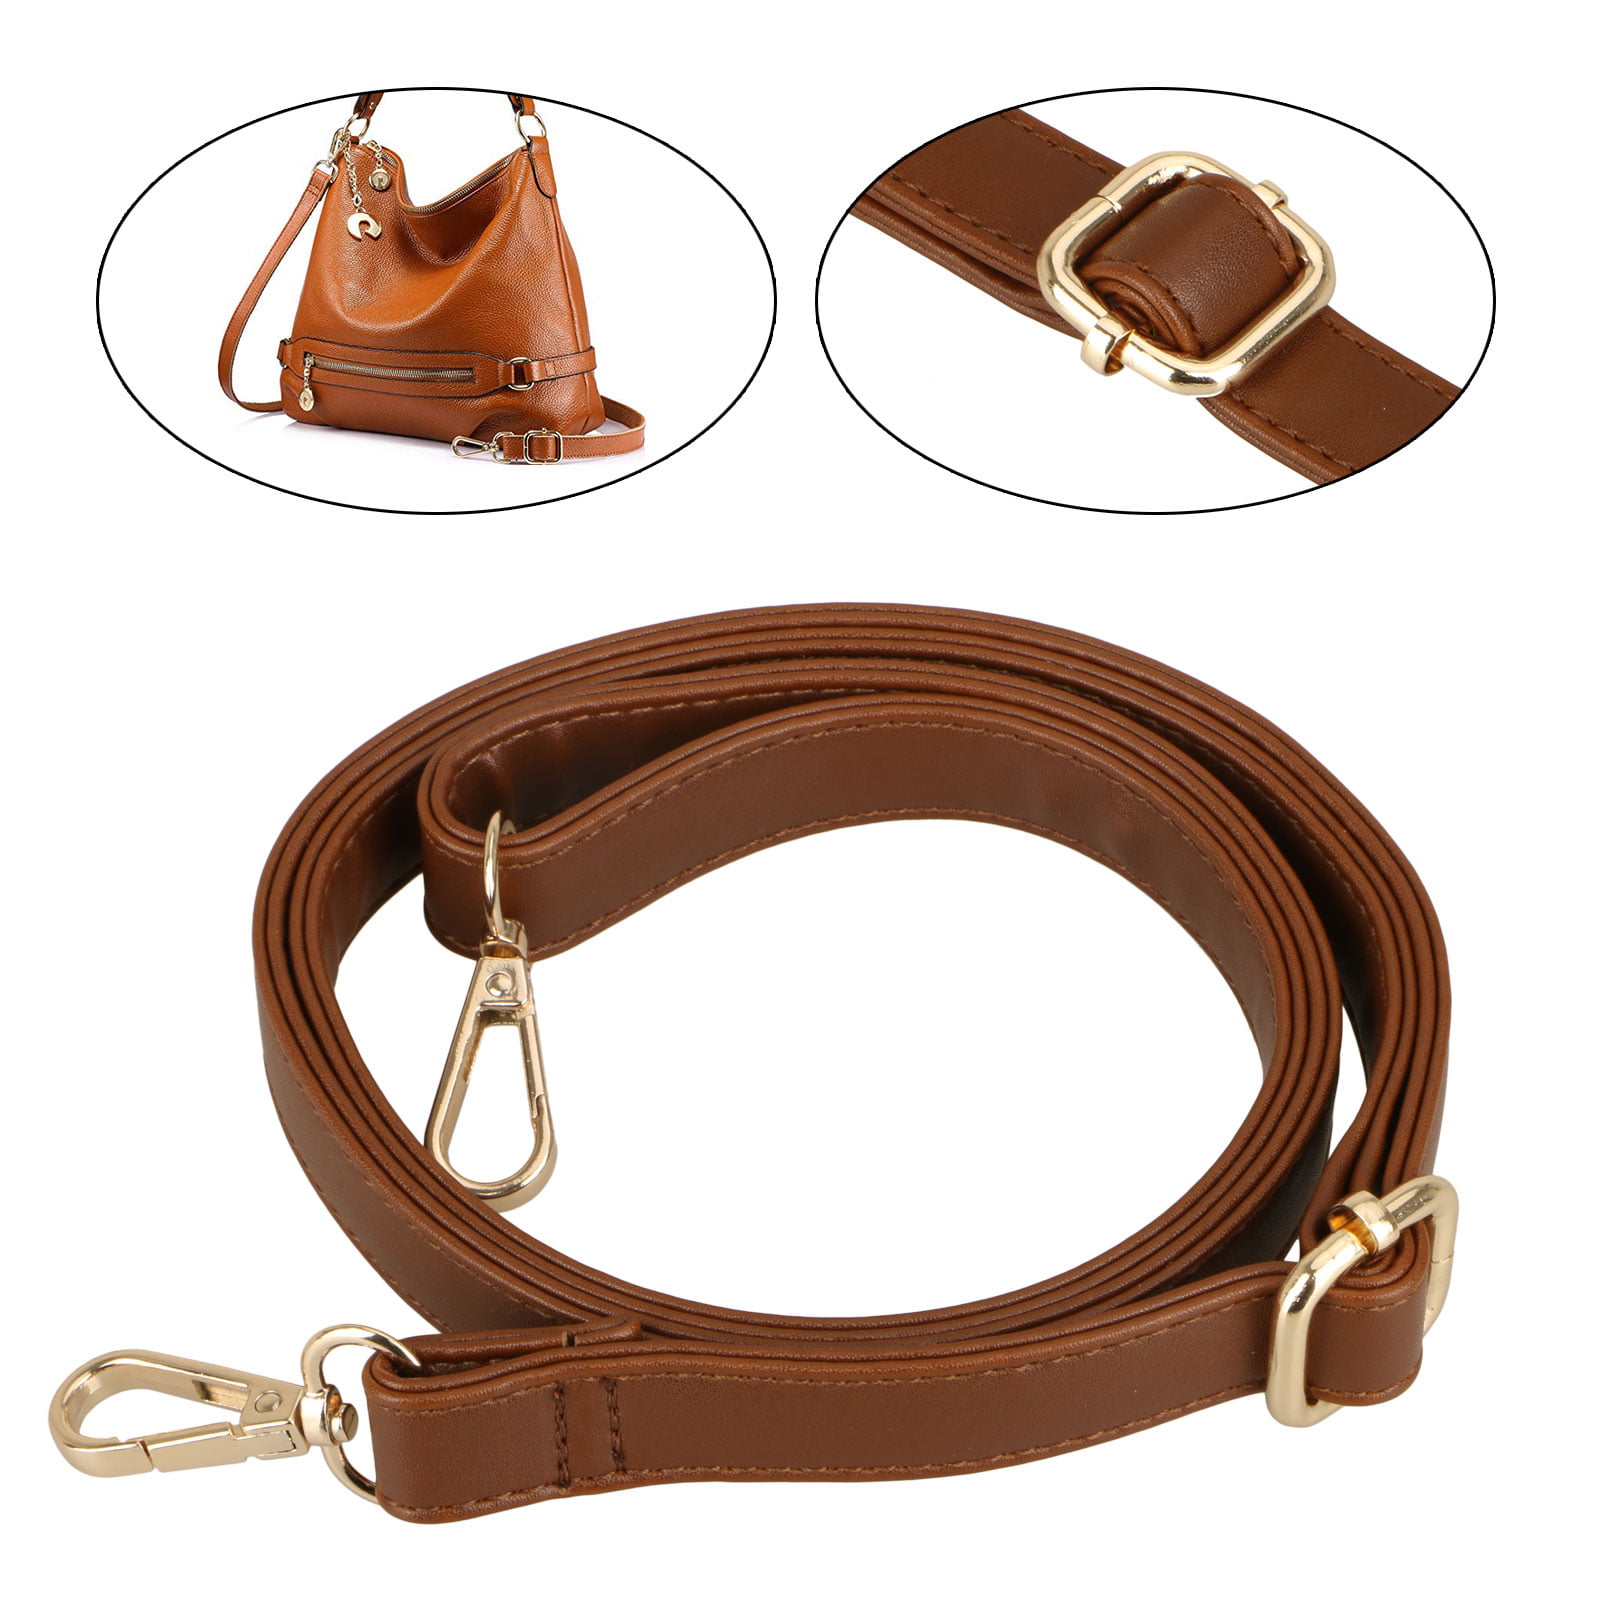 Adjustable Real Leather Replacement Shoulder Crossbody Strap Handbags Bag Purse